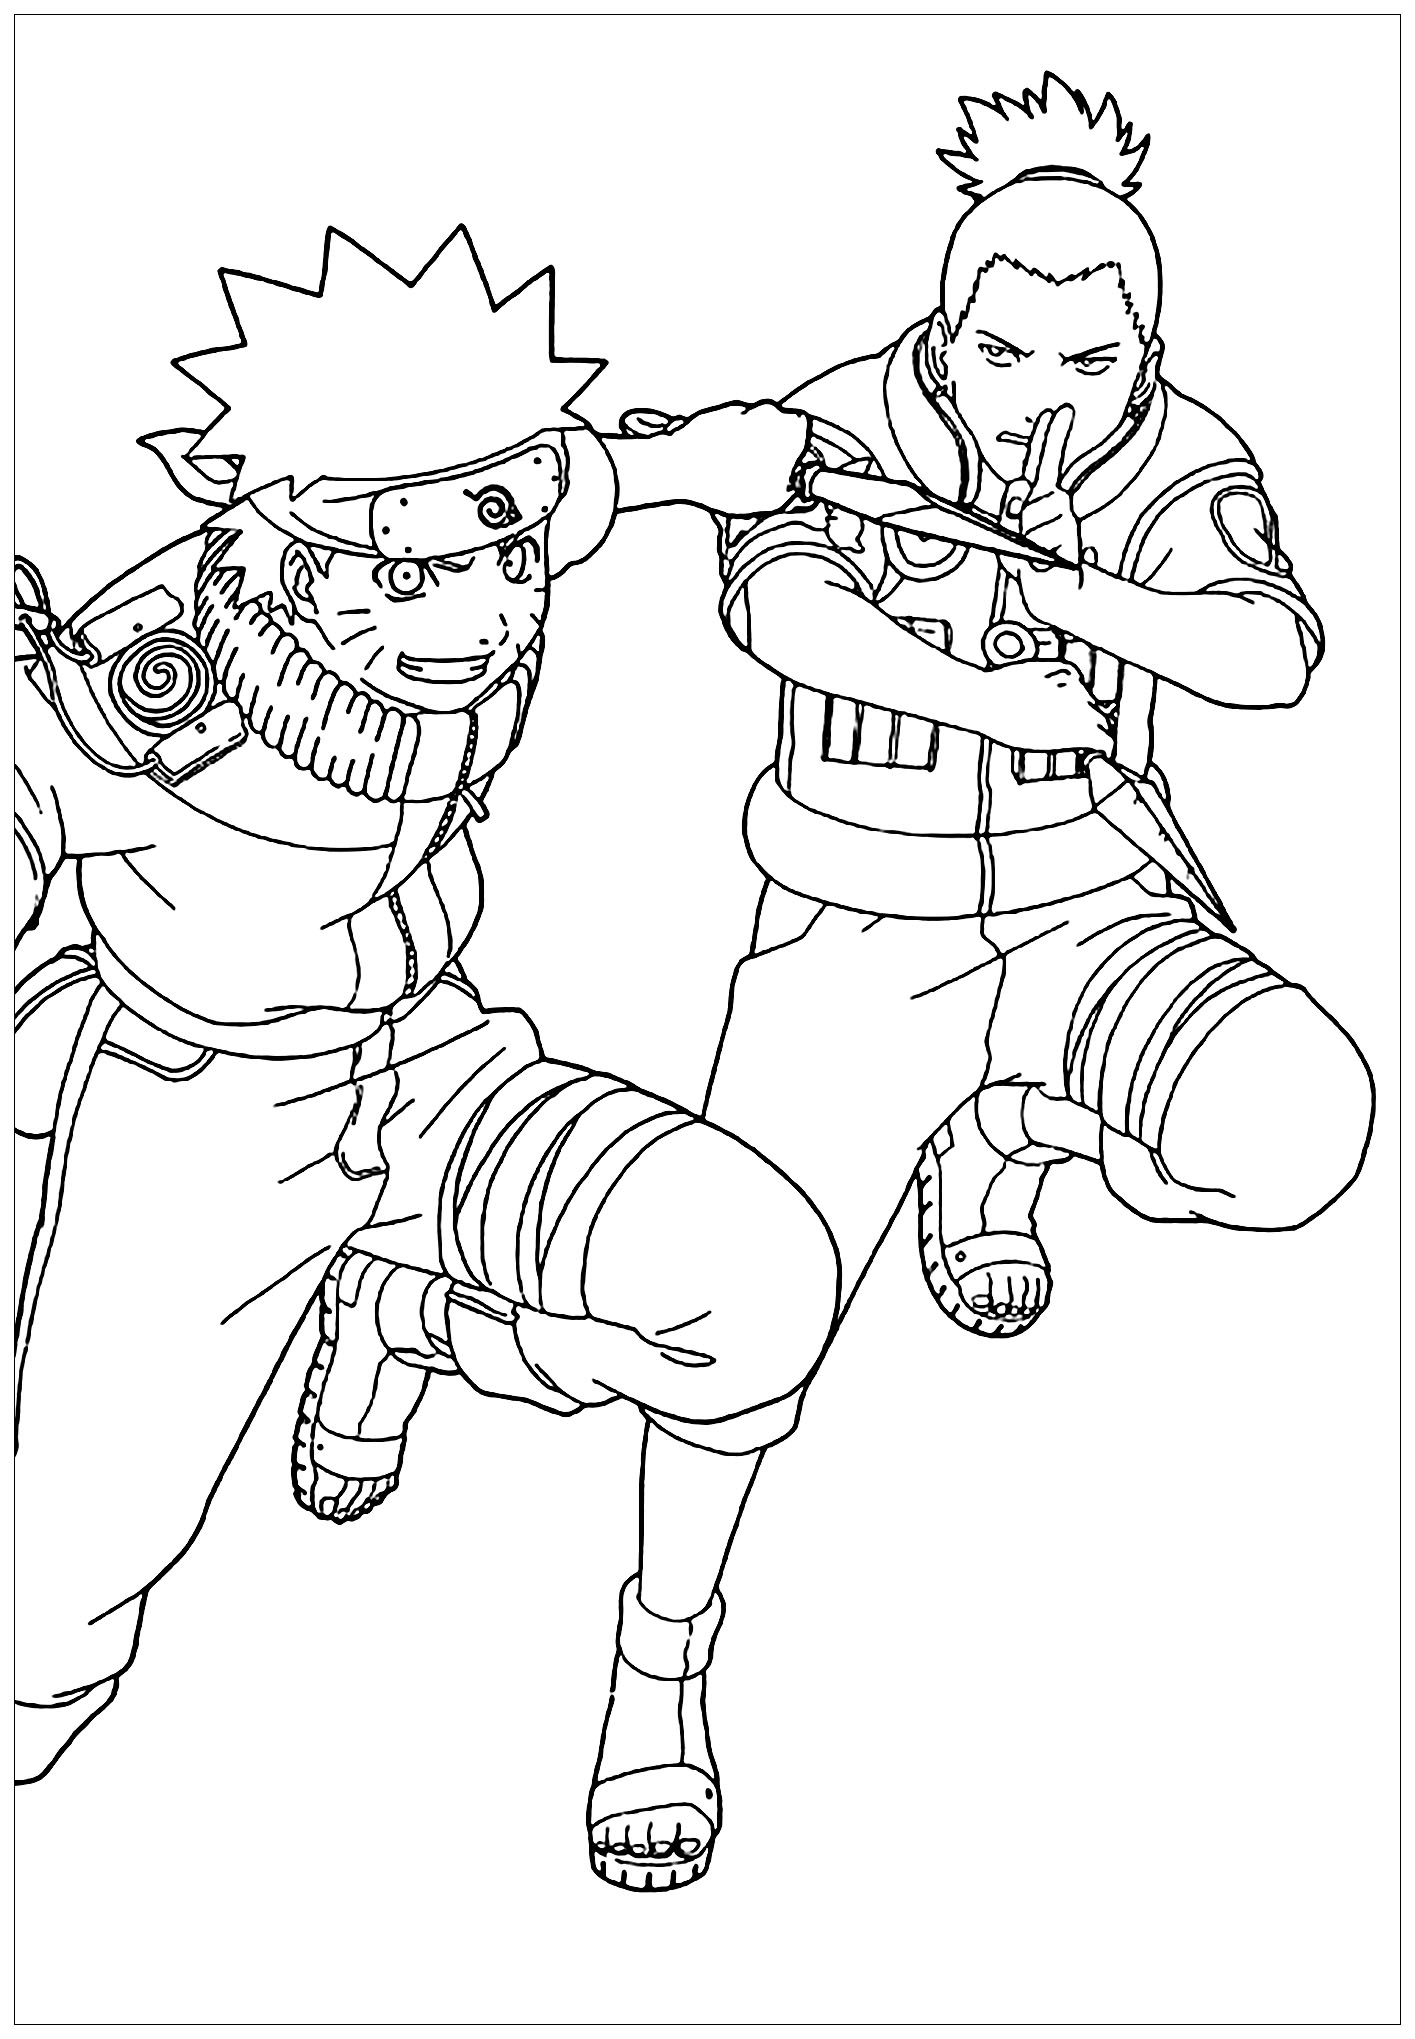 Colorear a Naruto y Shikamaru